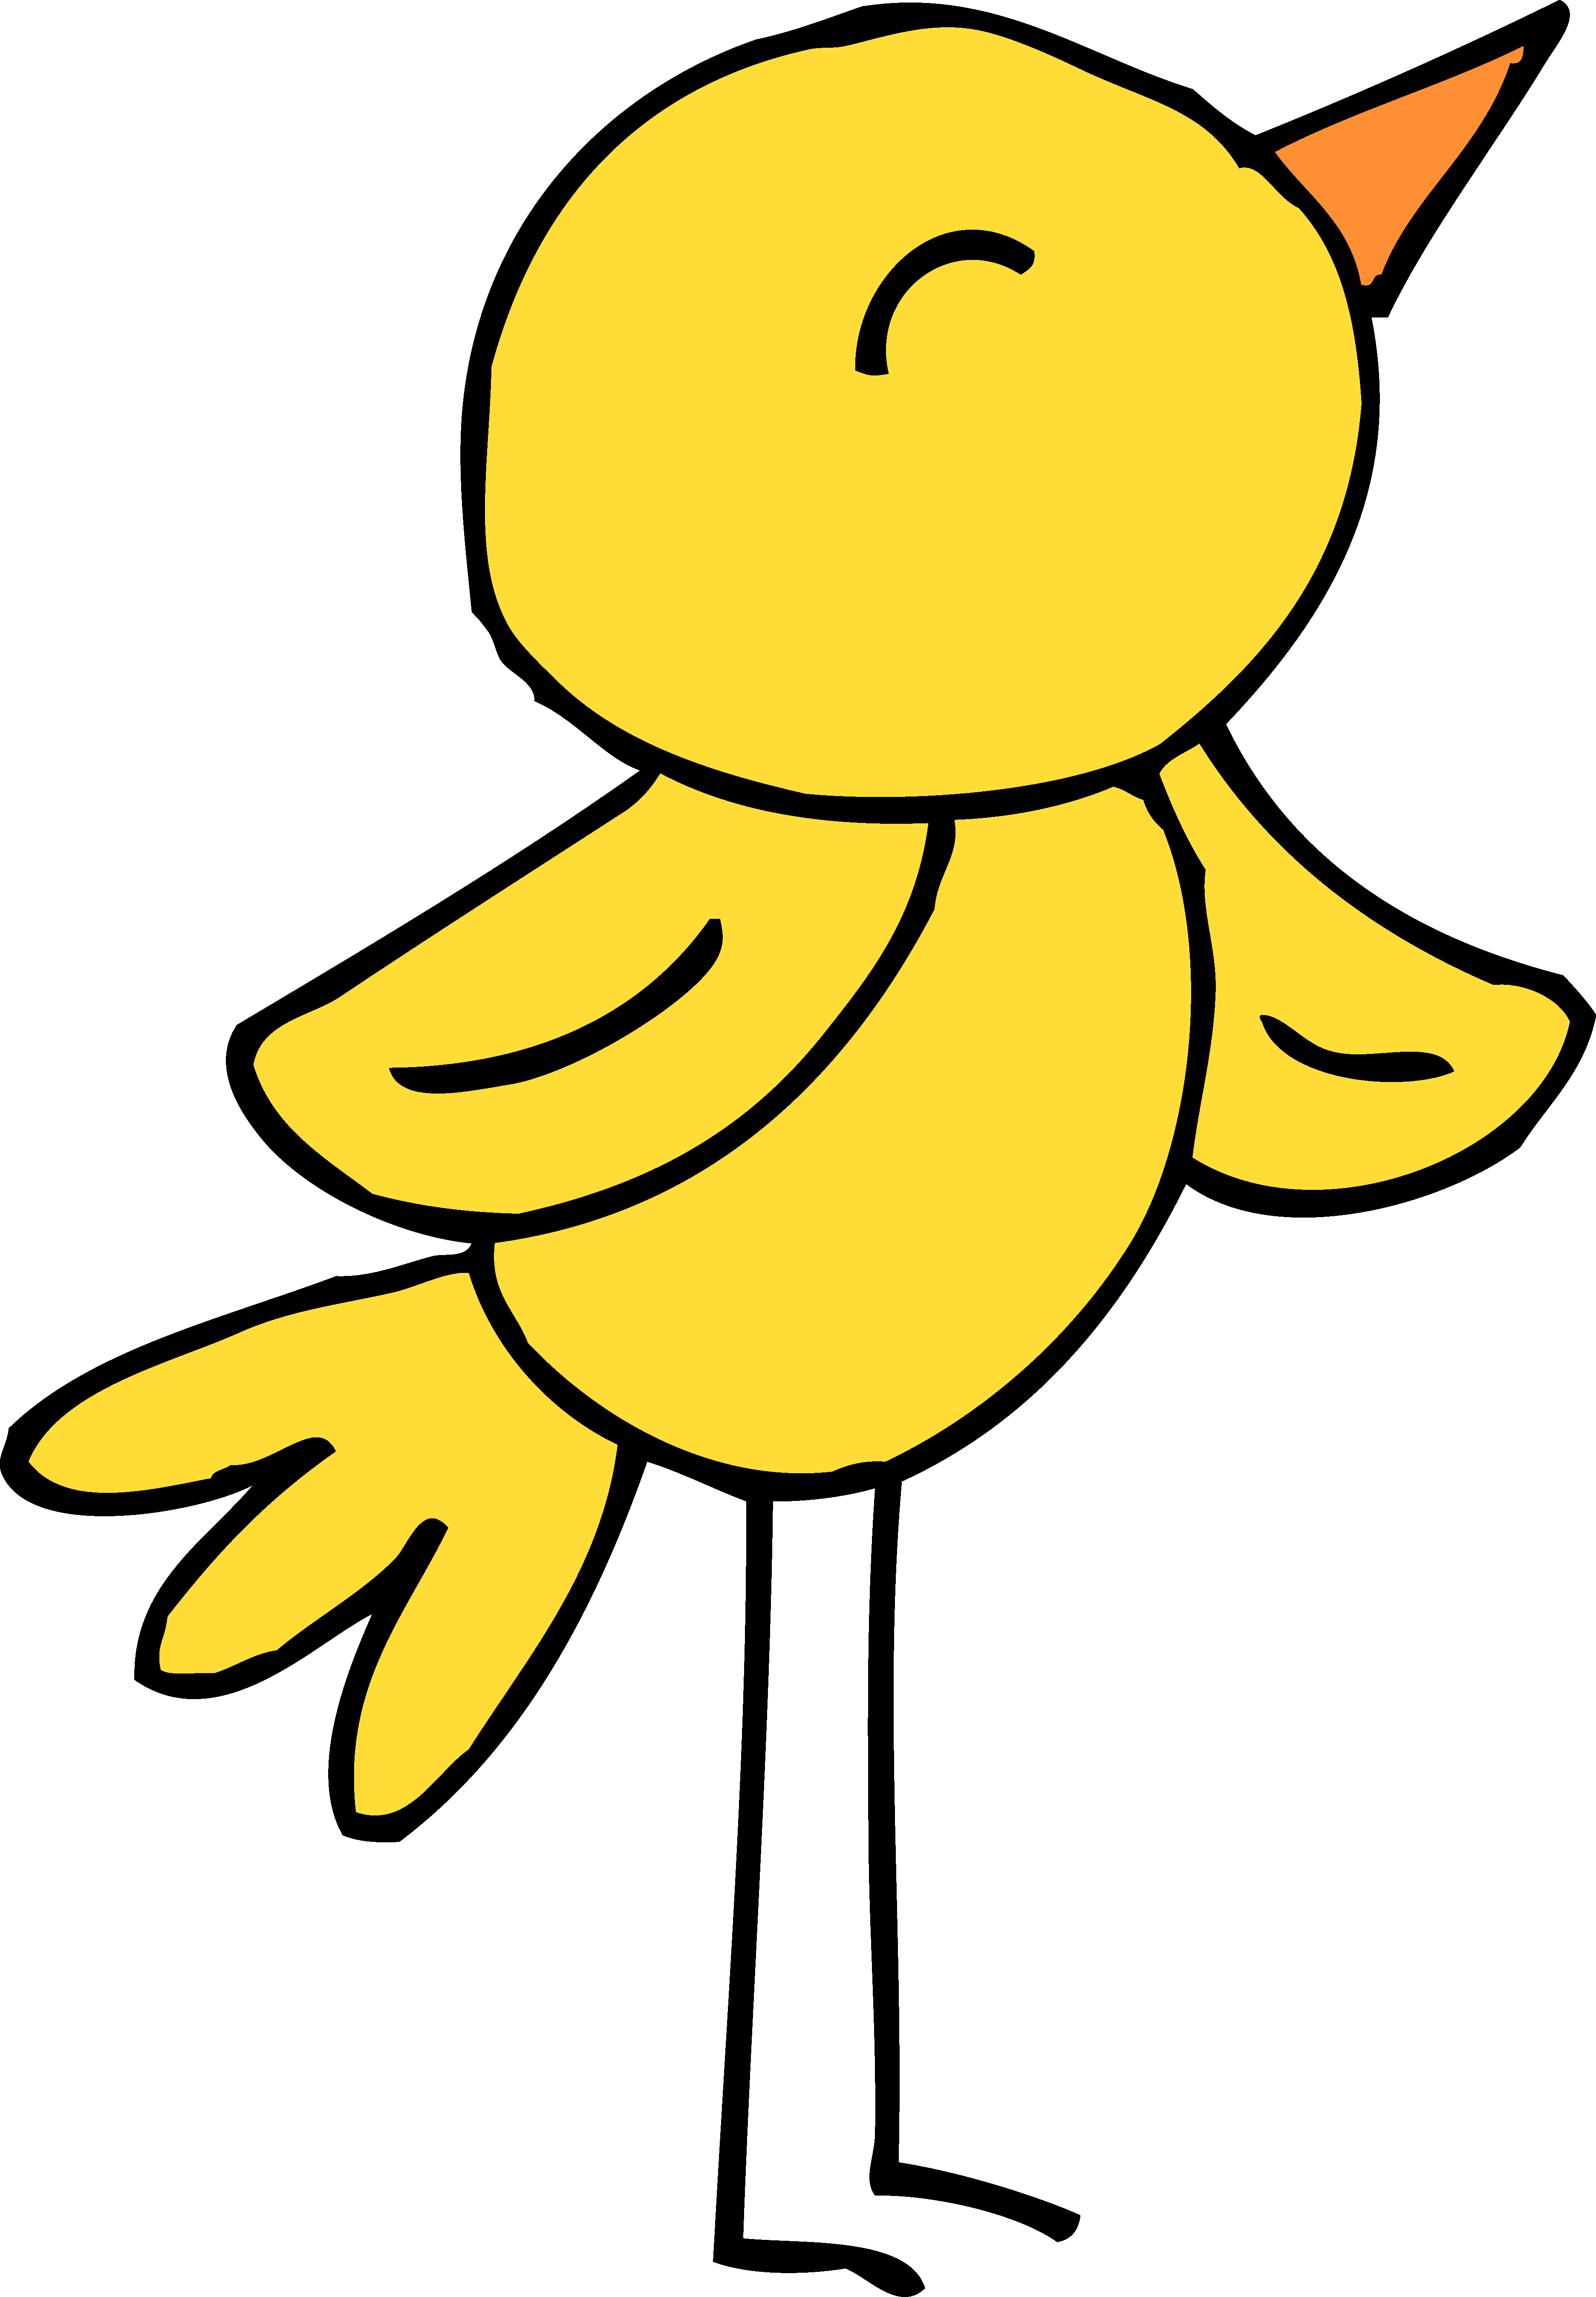 Cute yellow bird.